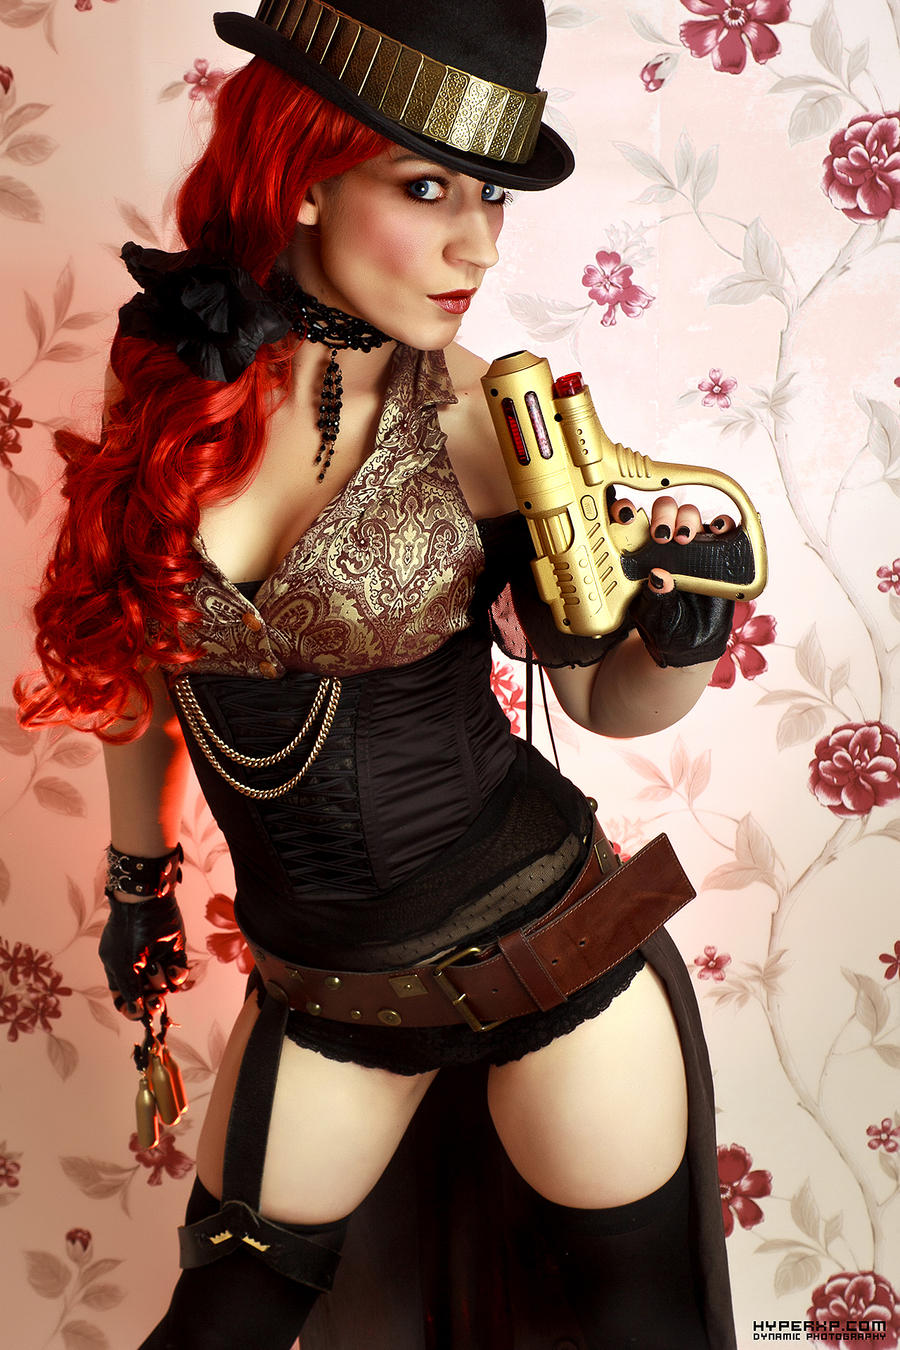 Steampunk Glamour : The Girl, The Gun